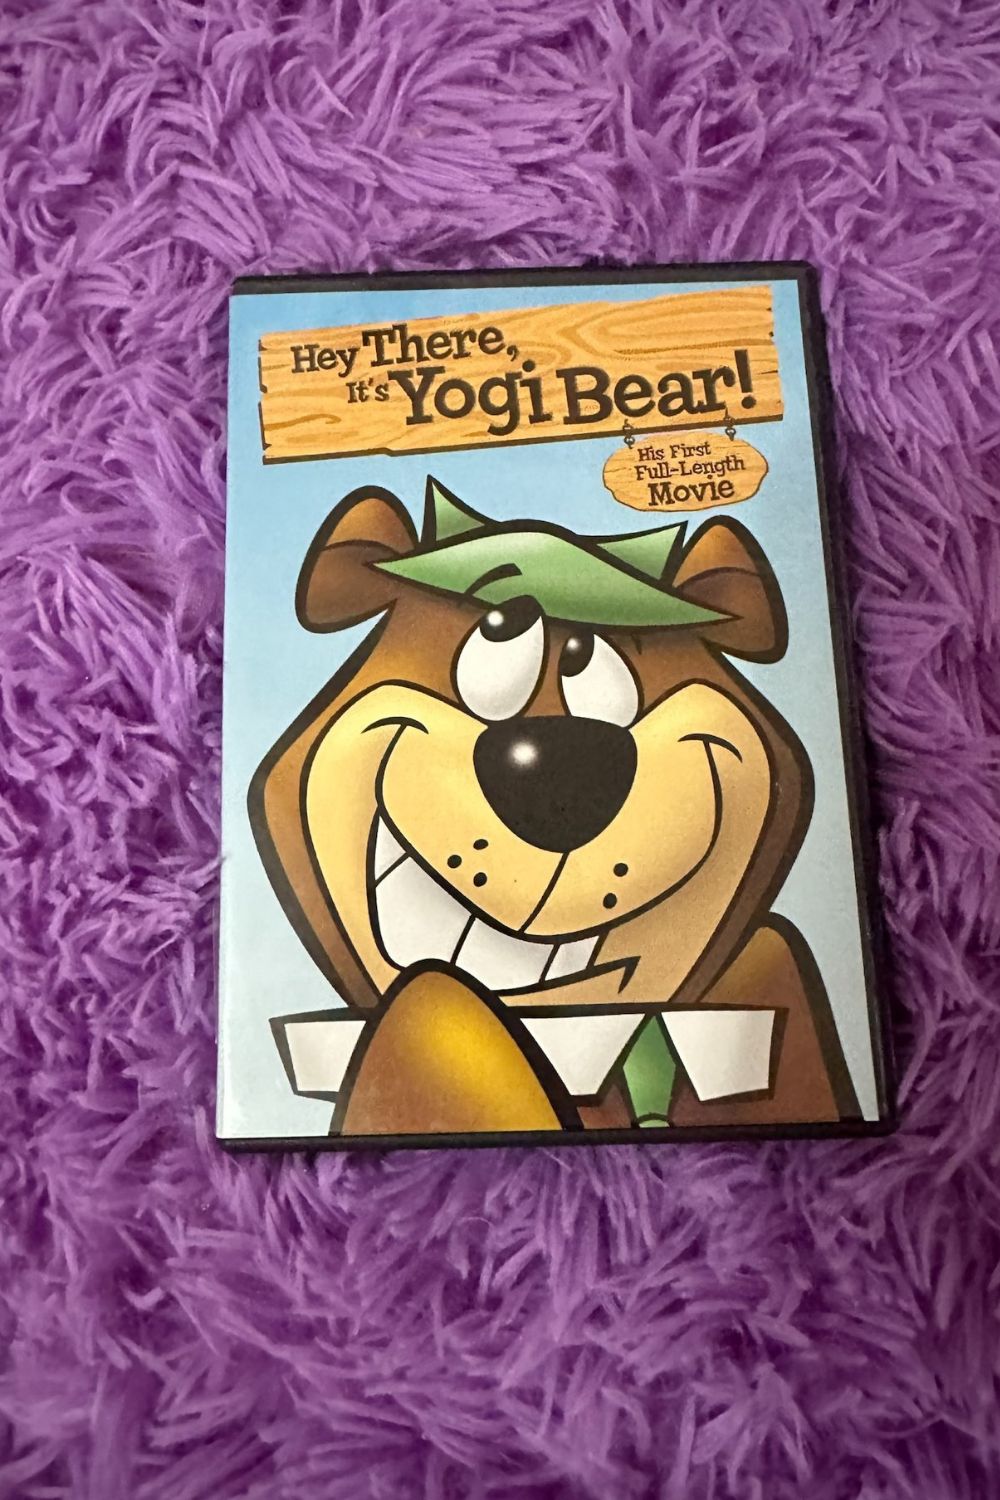 FULL　MOVIE　FIRST　IT'S　YOGI　LENGTH　Nostalchicks　BEAR!　HIS　HEY　–　THERE,　DVD*